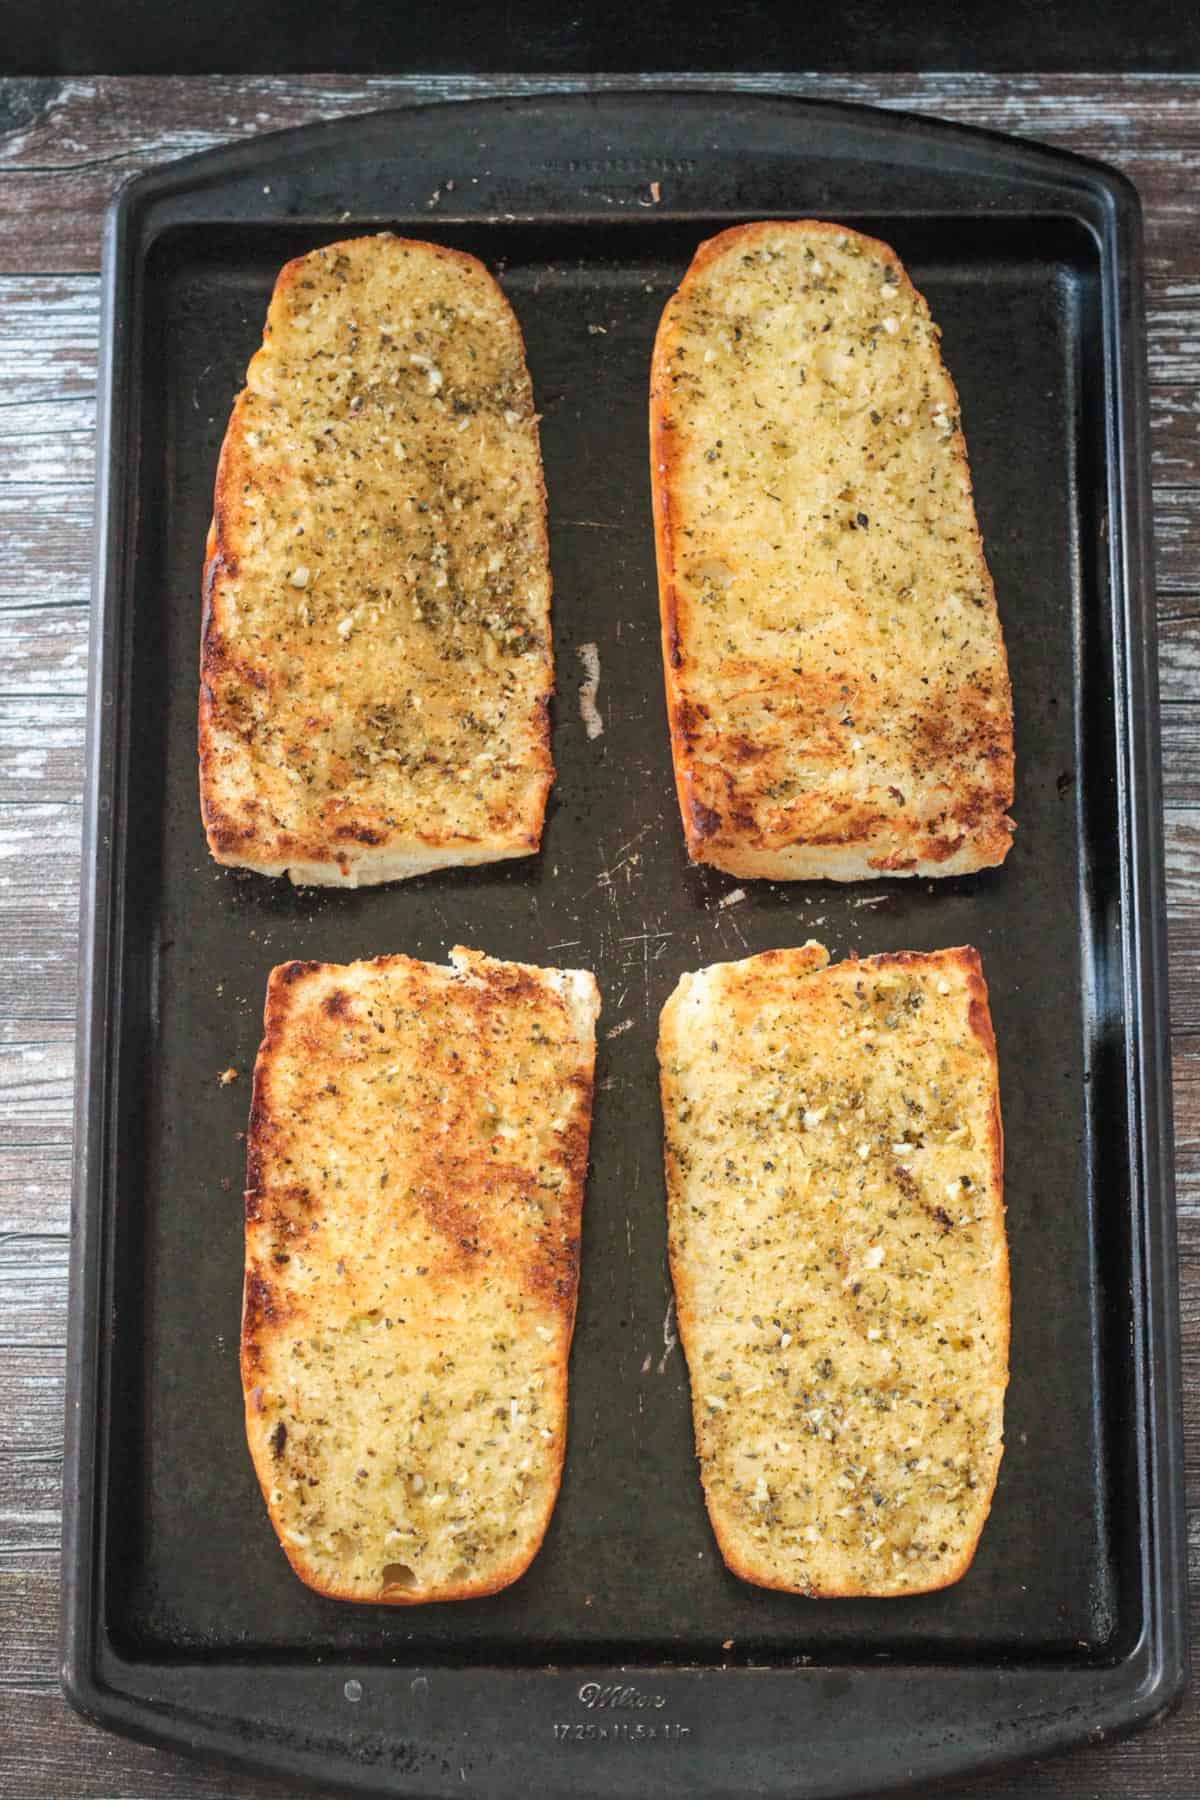 Finished vegan garlic bread on a baking sheet.